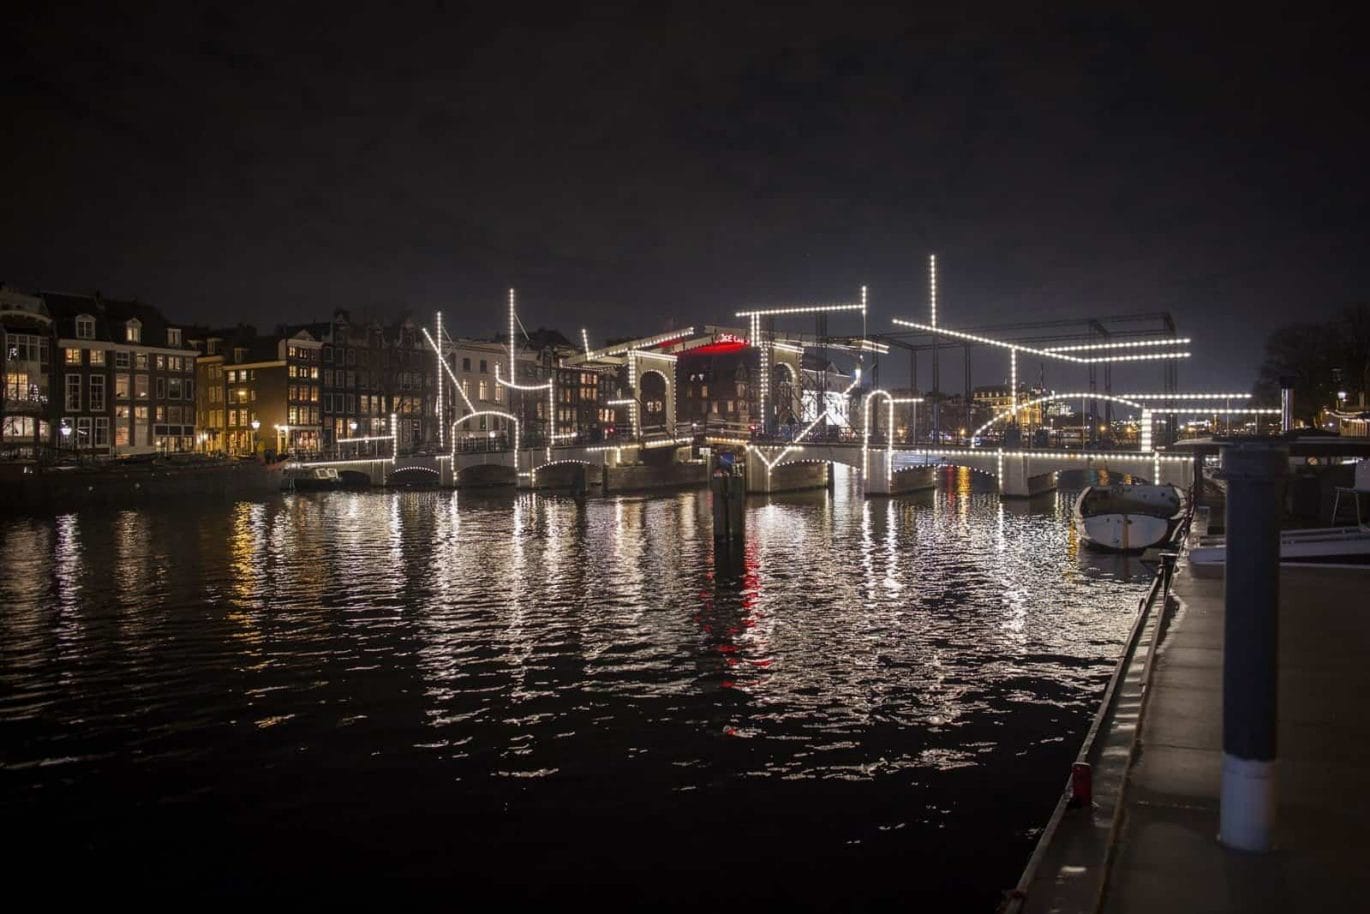 Nacht Tekening - By Krijn de Koning - Amsterdam Light Festival 2019 - Photo Copyright Janus van den Eijnden (1)